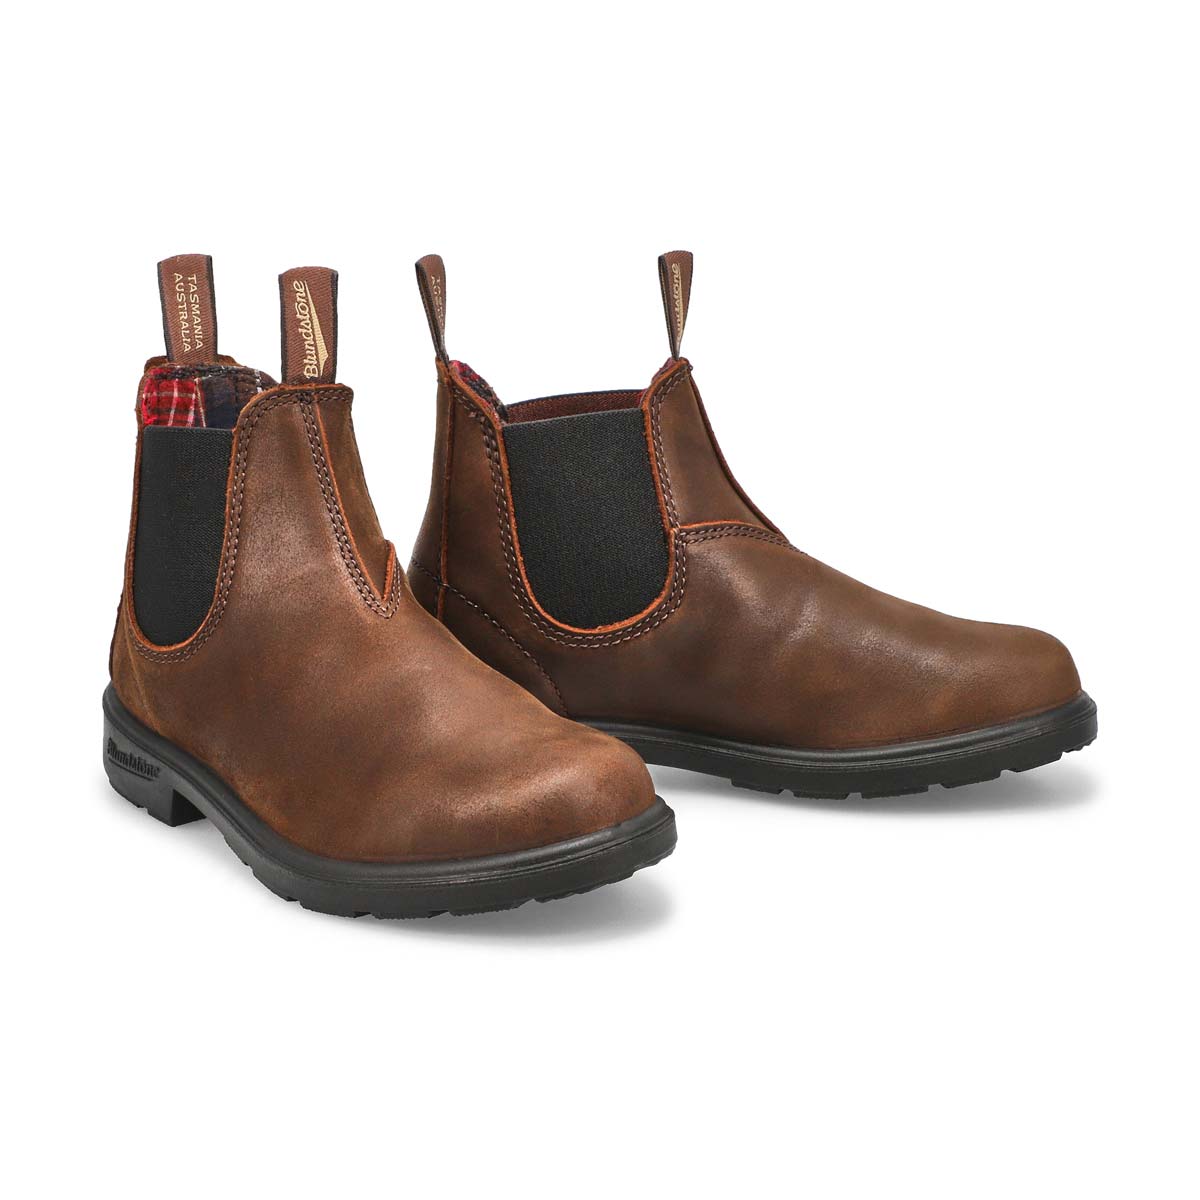 Unisex 1468 - Kids  Boot - Antique Brown